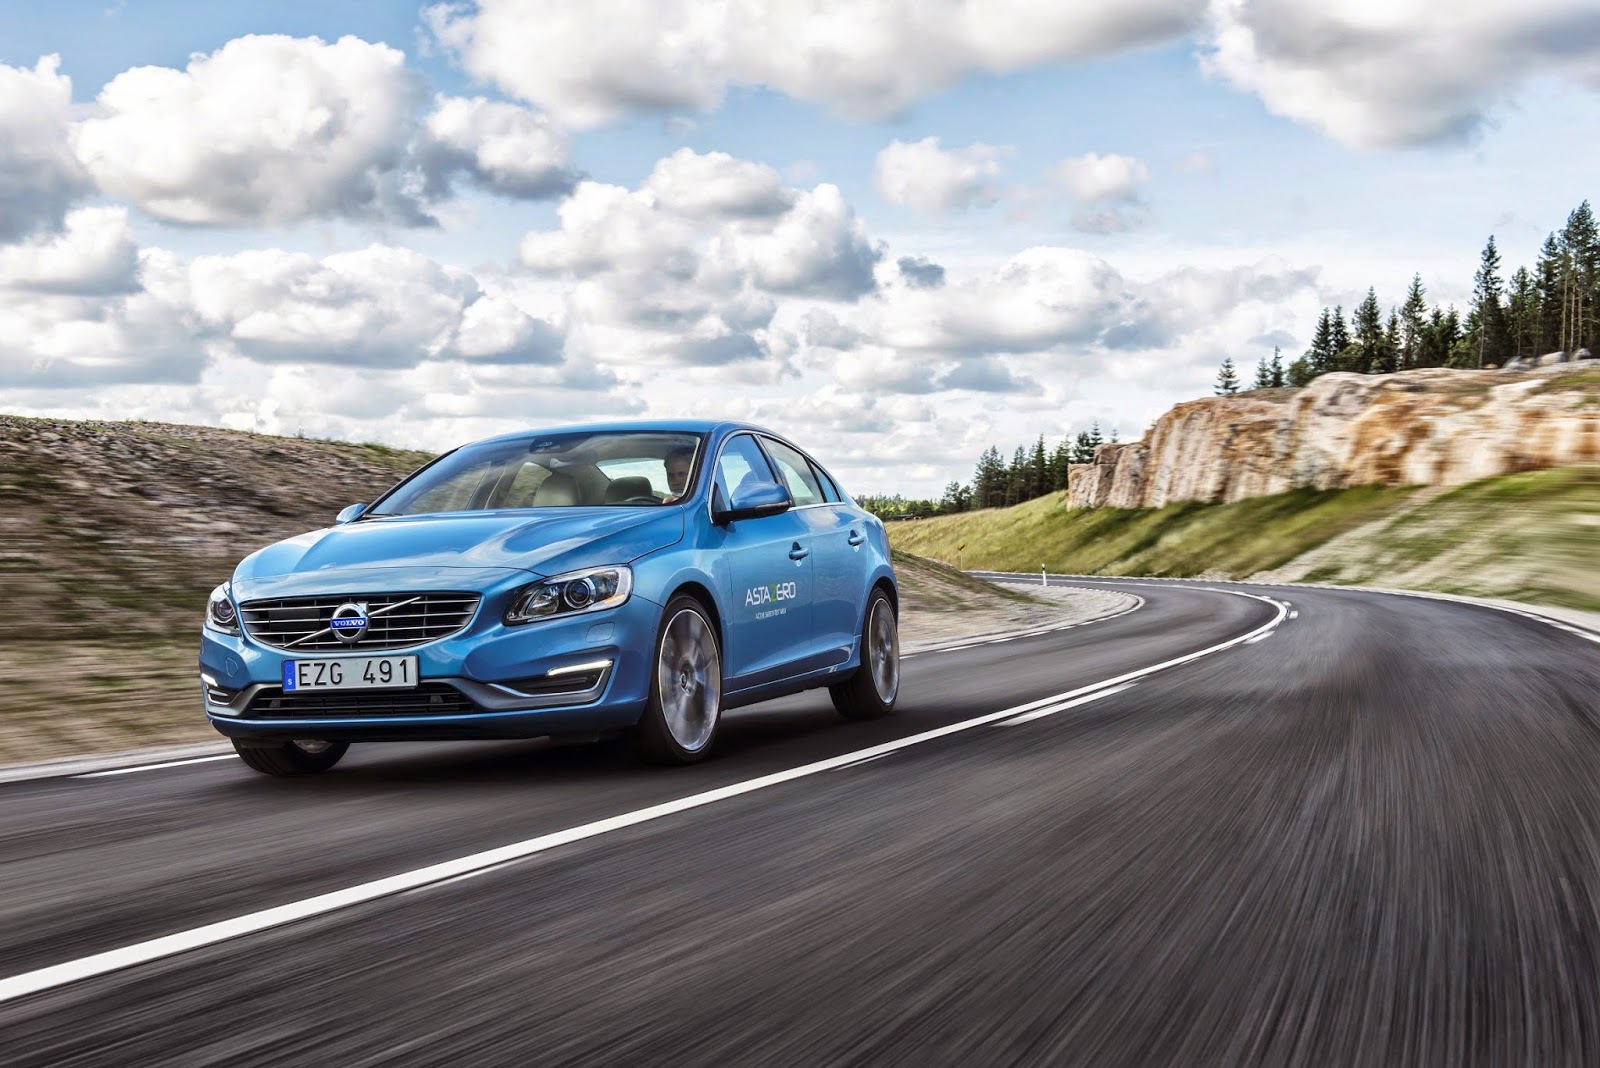 AstaZero: Η Volvo εγκαινιάζει την πιο σύγχρονη πίστα δοκιμών στον κόσμο, κοντά στο Γκέτεμποργκ - Φωτογραφία 4